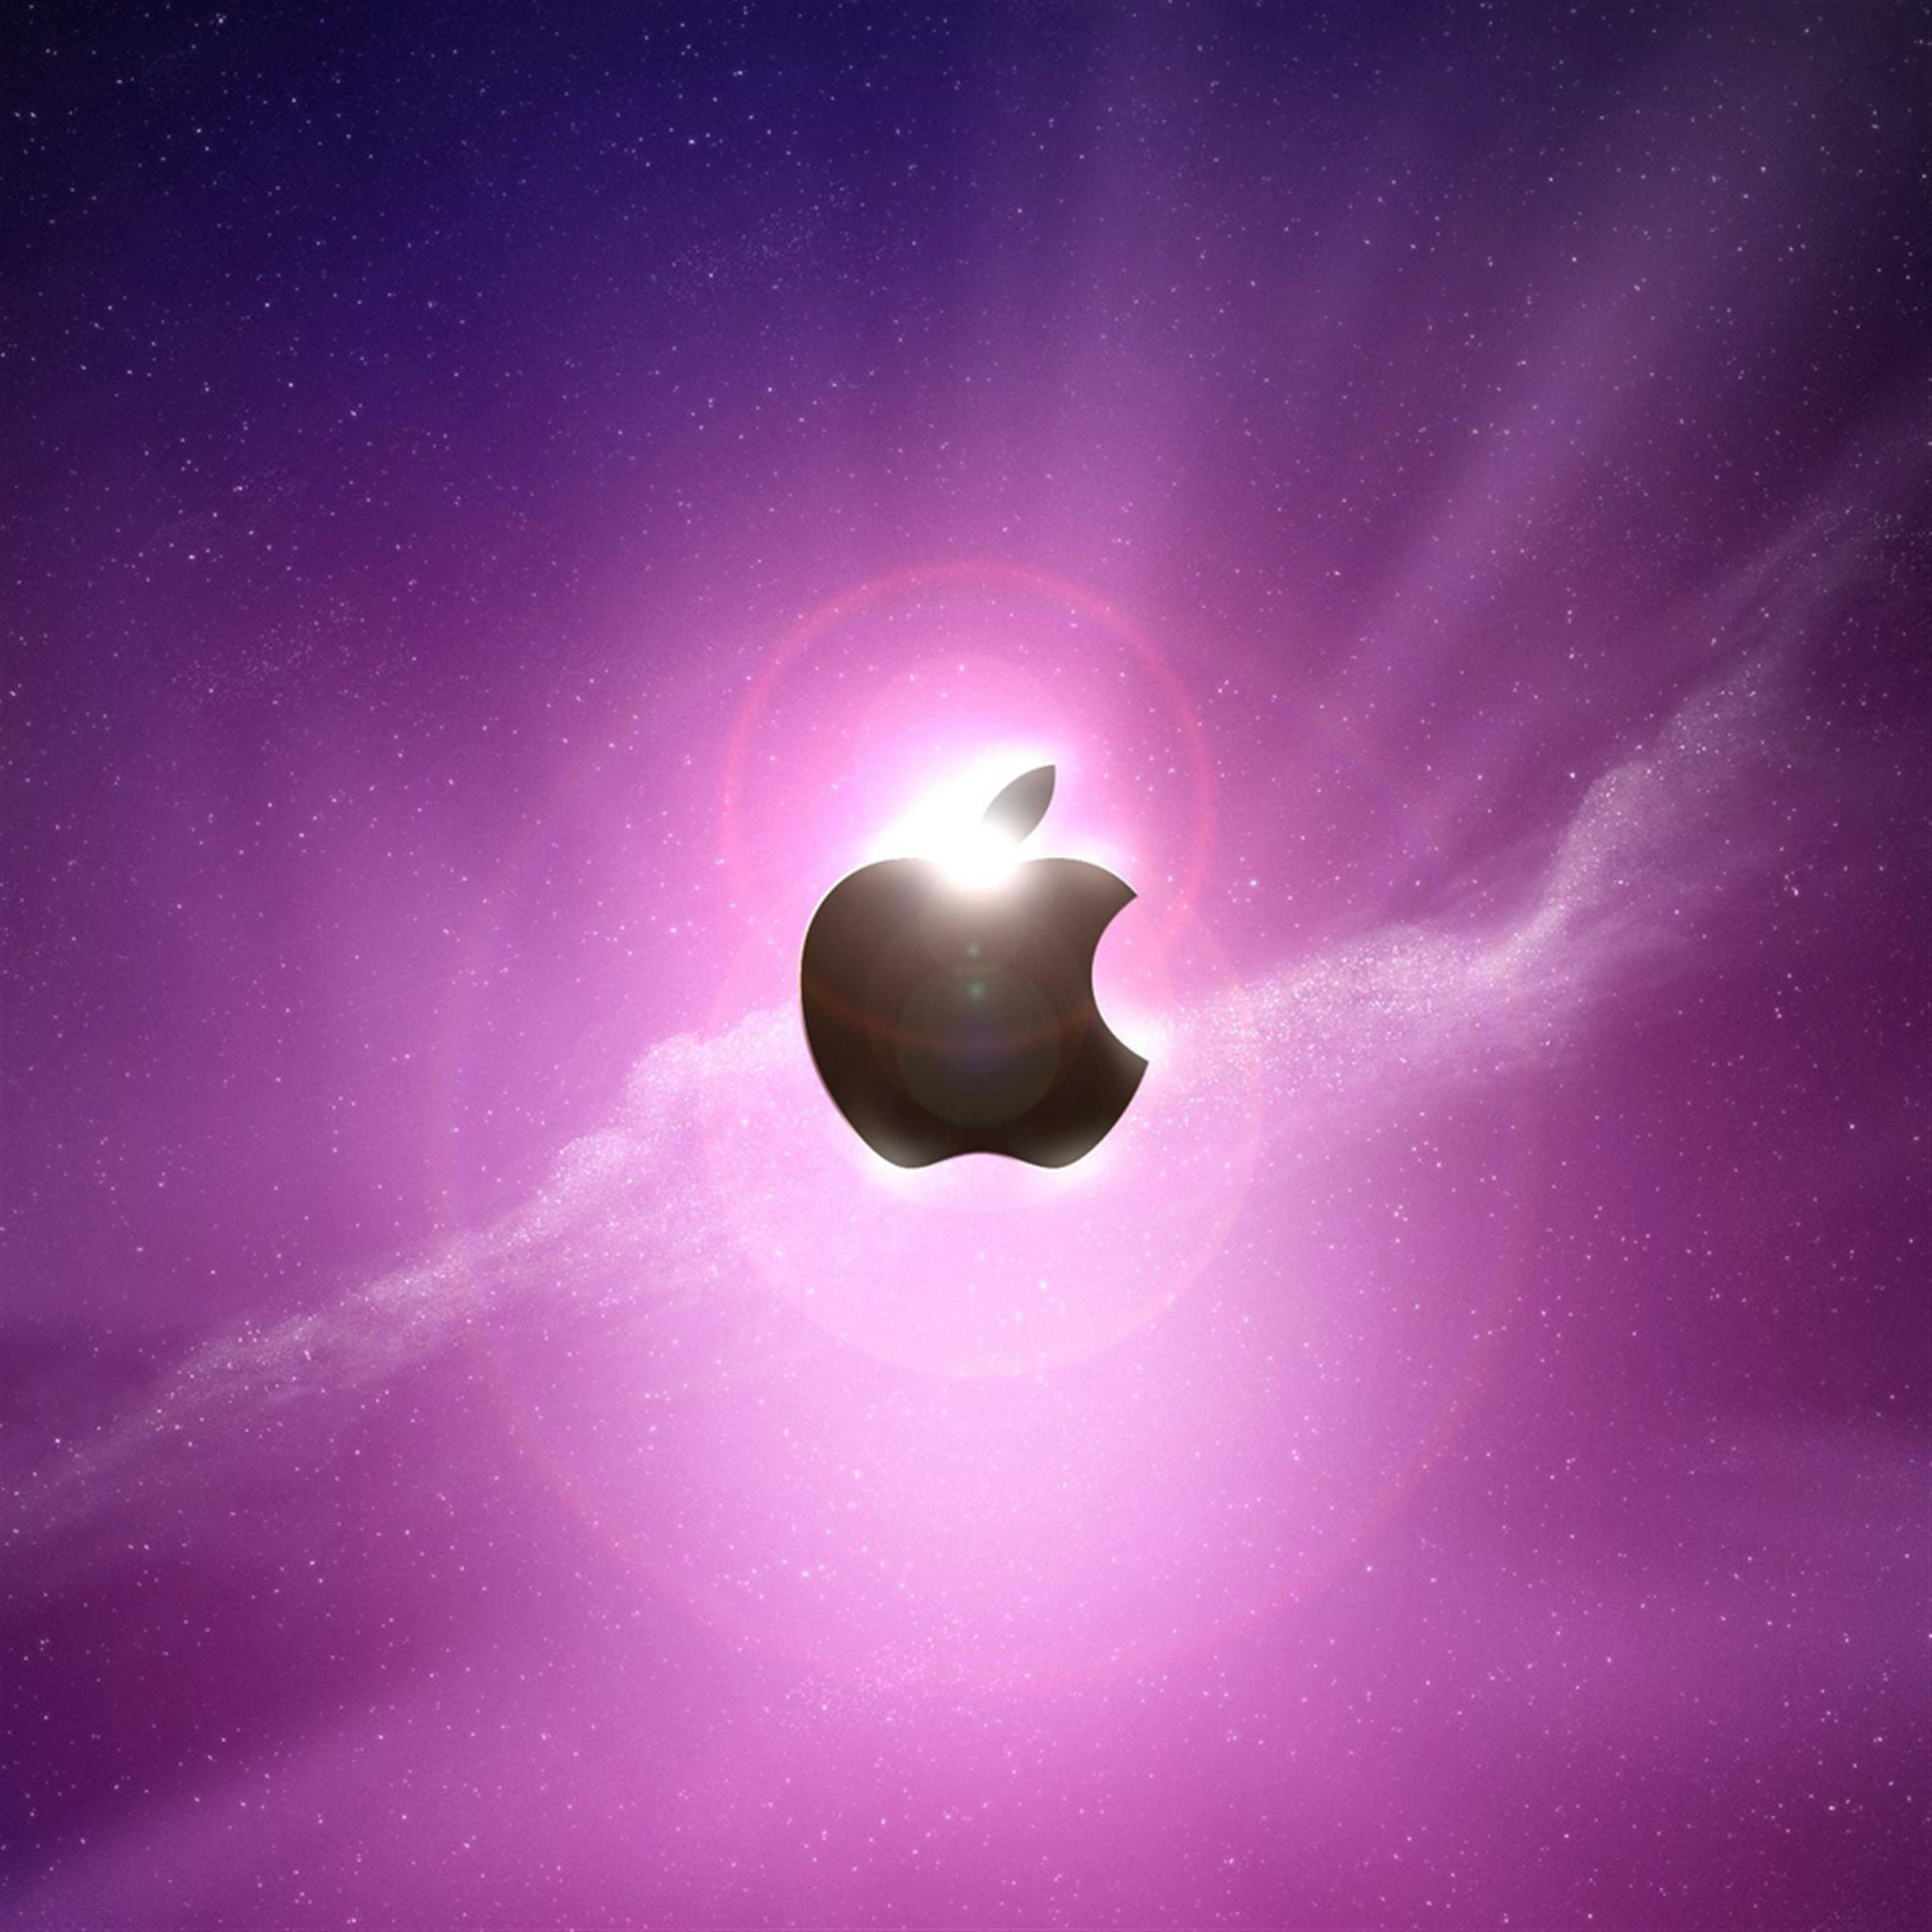 Apple iPad Backgrounds Free Download | PixelsTalk.Net